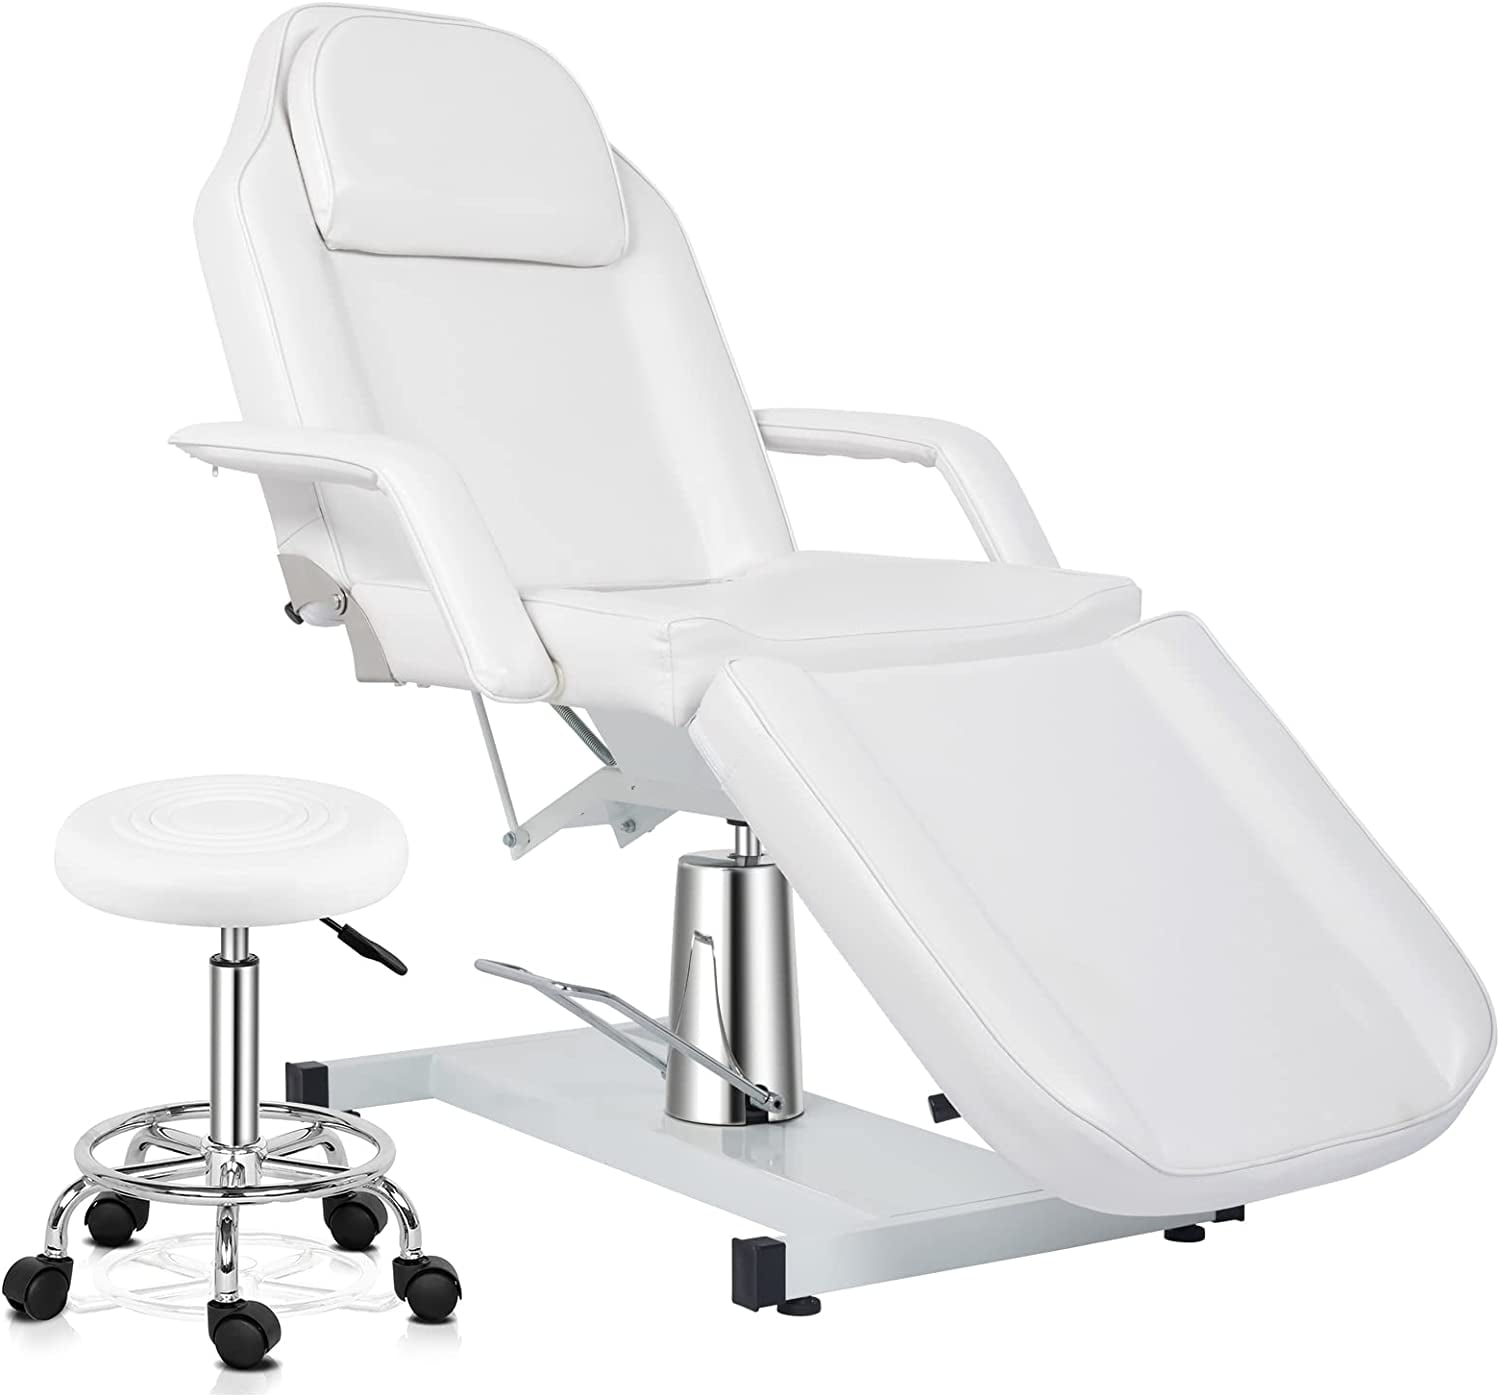 OmySalon Hydraulic Tattoo Chair Esthetician Bed w Stool Multi Purpose 3 Section Facial Table Adjustable Beauty Salon Spa Massage Equipment White 498389ec 36bd 4c4a b0f3 12e817c35b05.d1024054a63c8cf269488714d3c4cb58